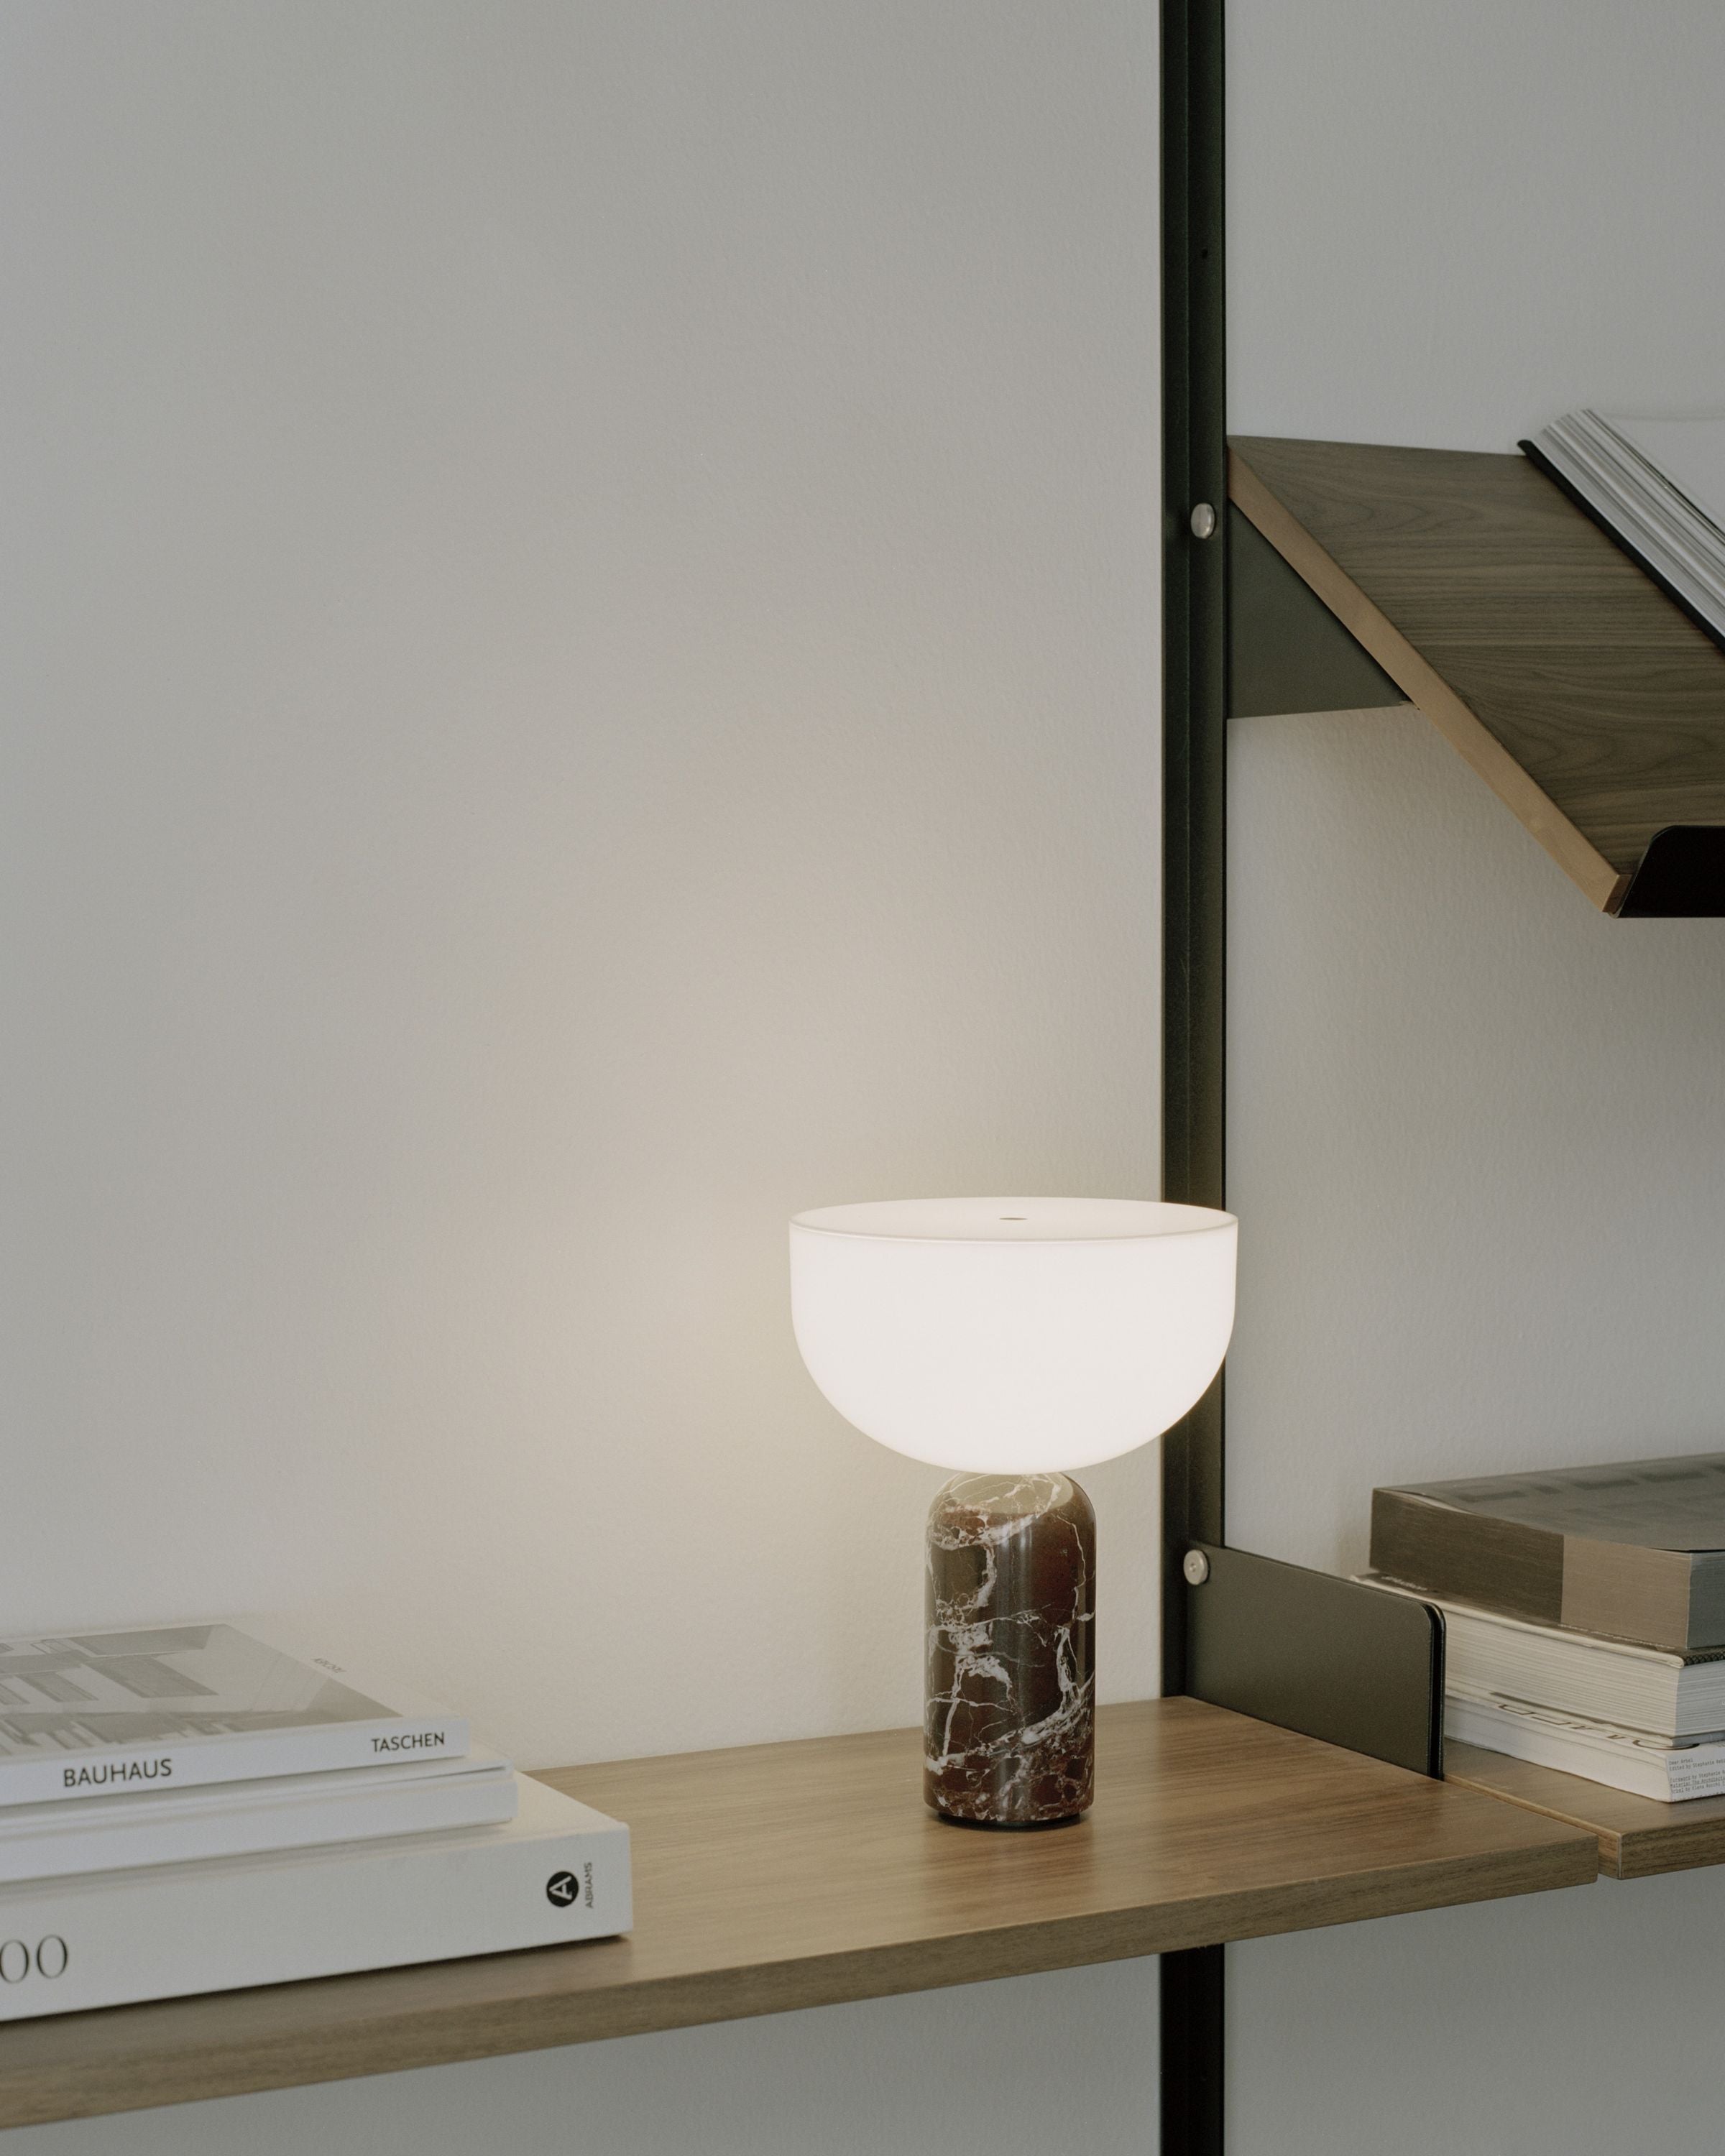 New Works Kizu Portable Table Lamp, Rosso Levanto